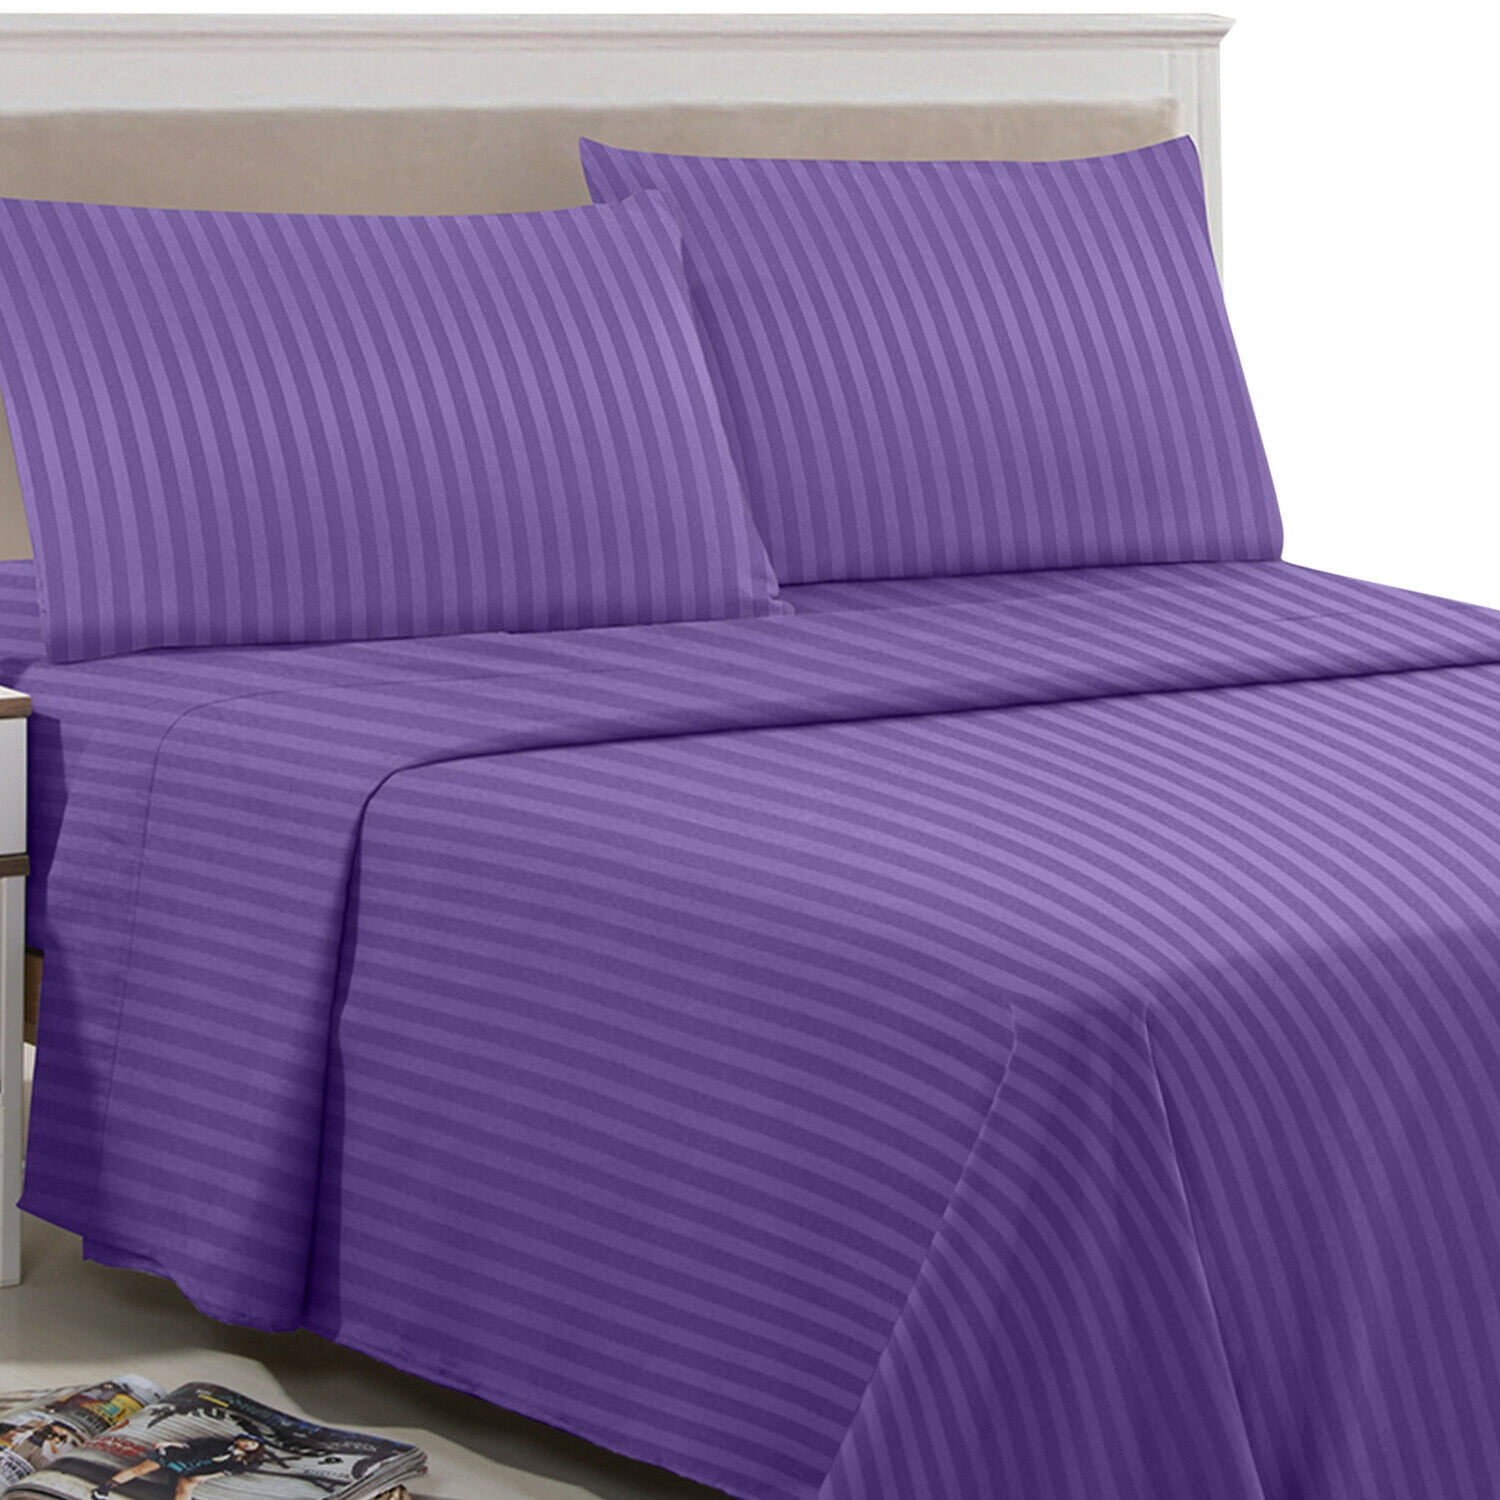 Egyptian Comfort Stripe 1800 Count 4 Piece Bed Sheet Set Deep Pocket Bed Sheets 